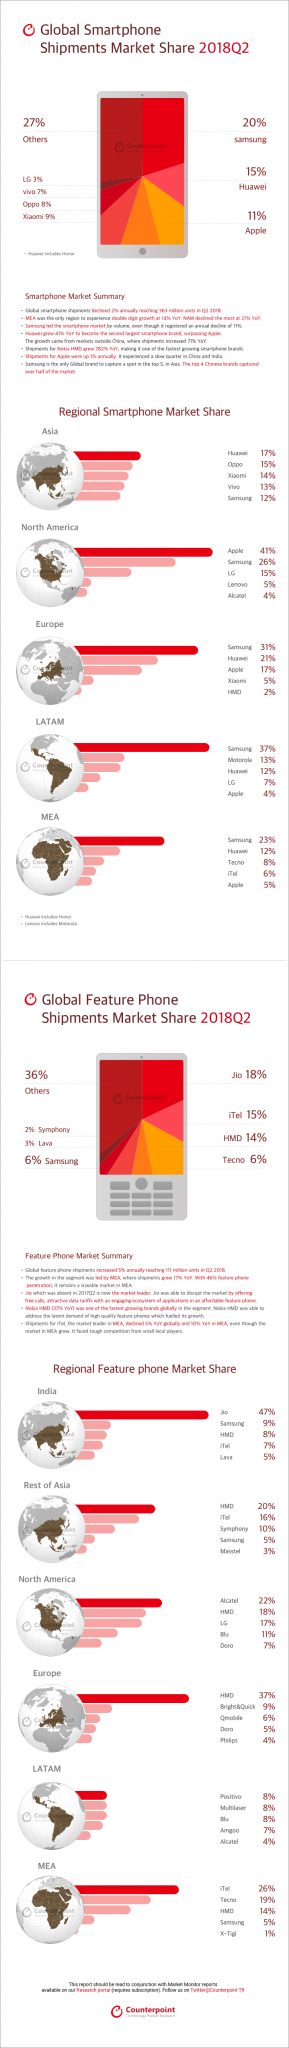 Global Smartphone Shipment Market Share Q2 2018